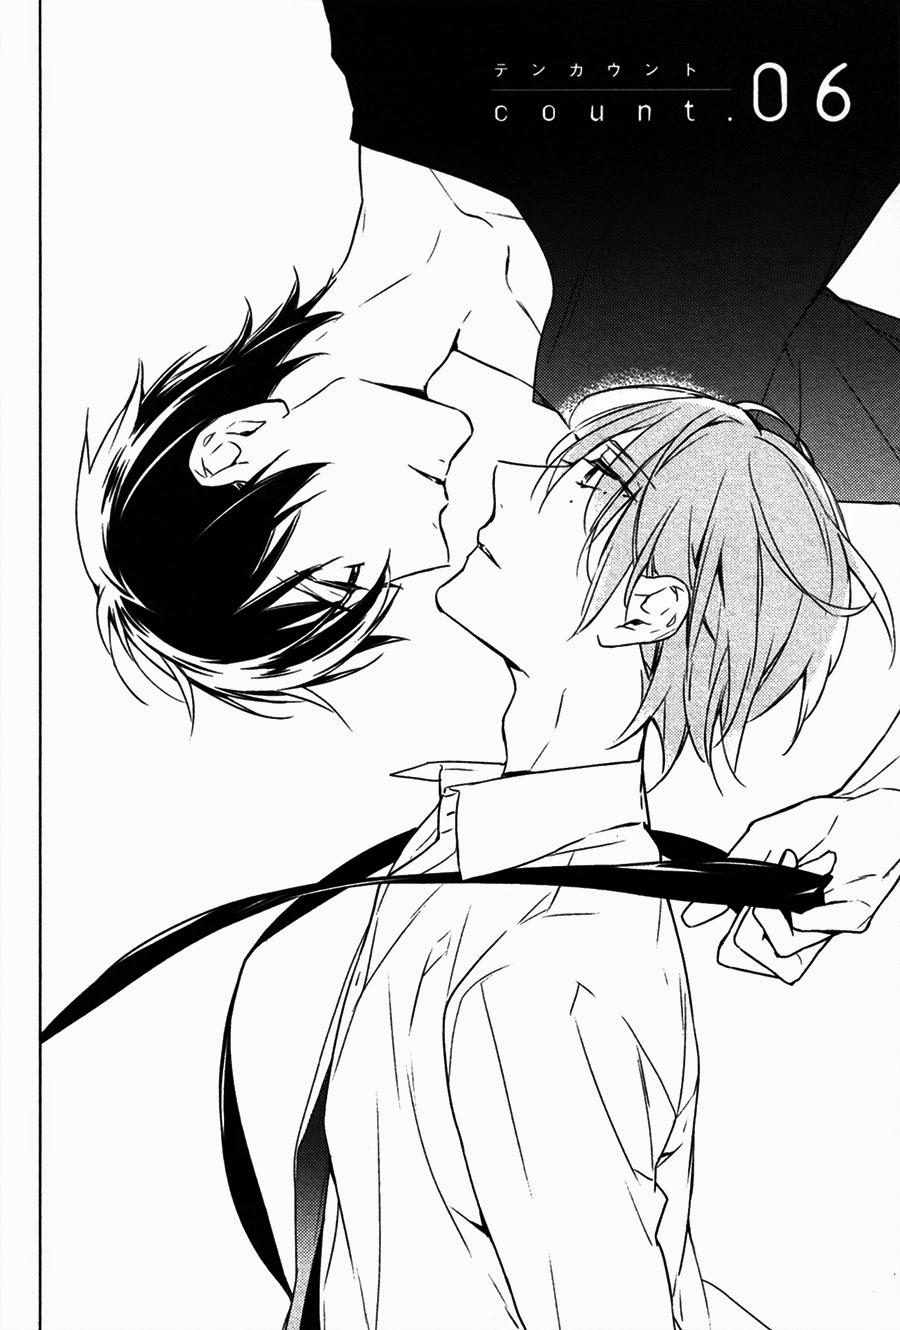 Яой манга время. Куросе Рику и Широтани Тадаоми поцелуй. Manga Yaoi до десяти. Тадаоми Широтани поцелуй. Яой Манга до десяти поцелуй.